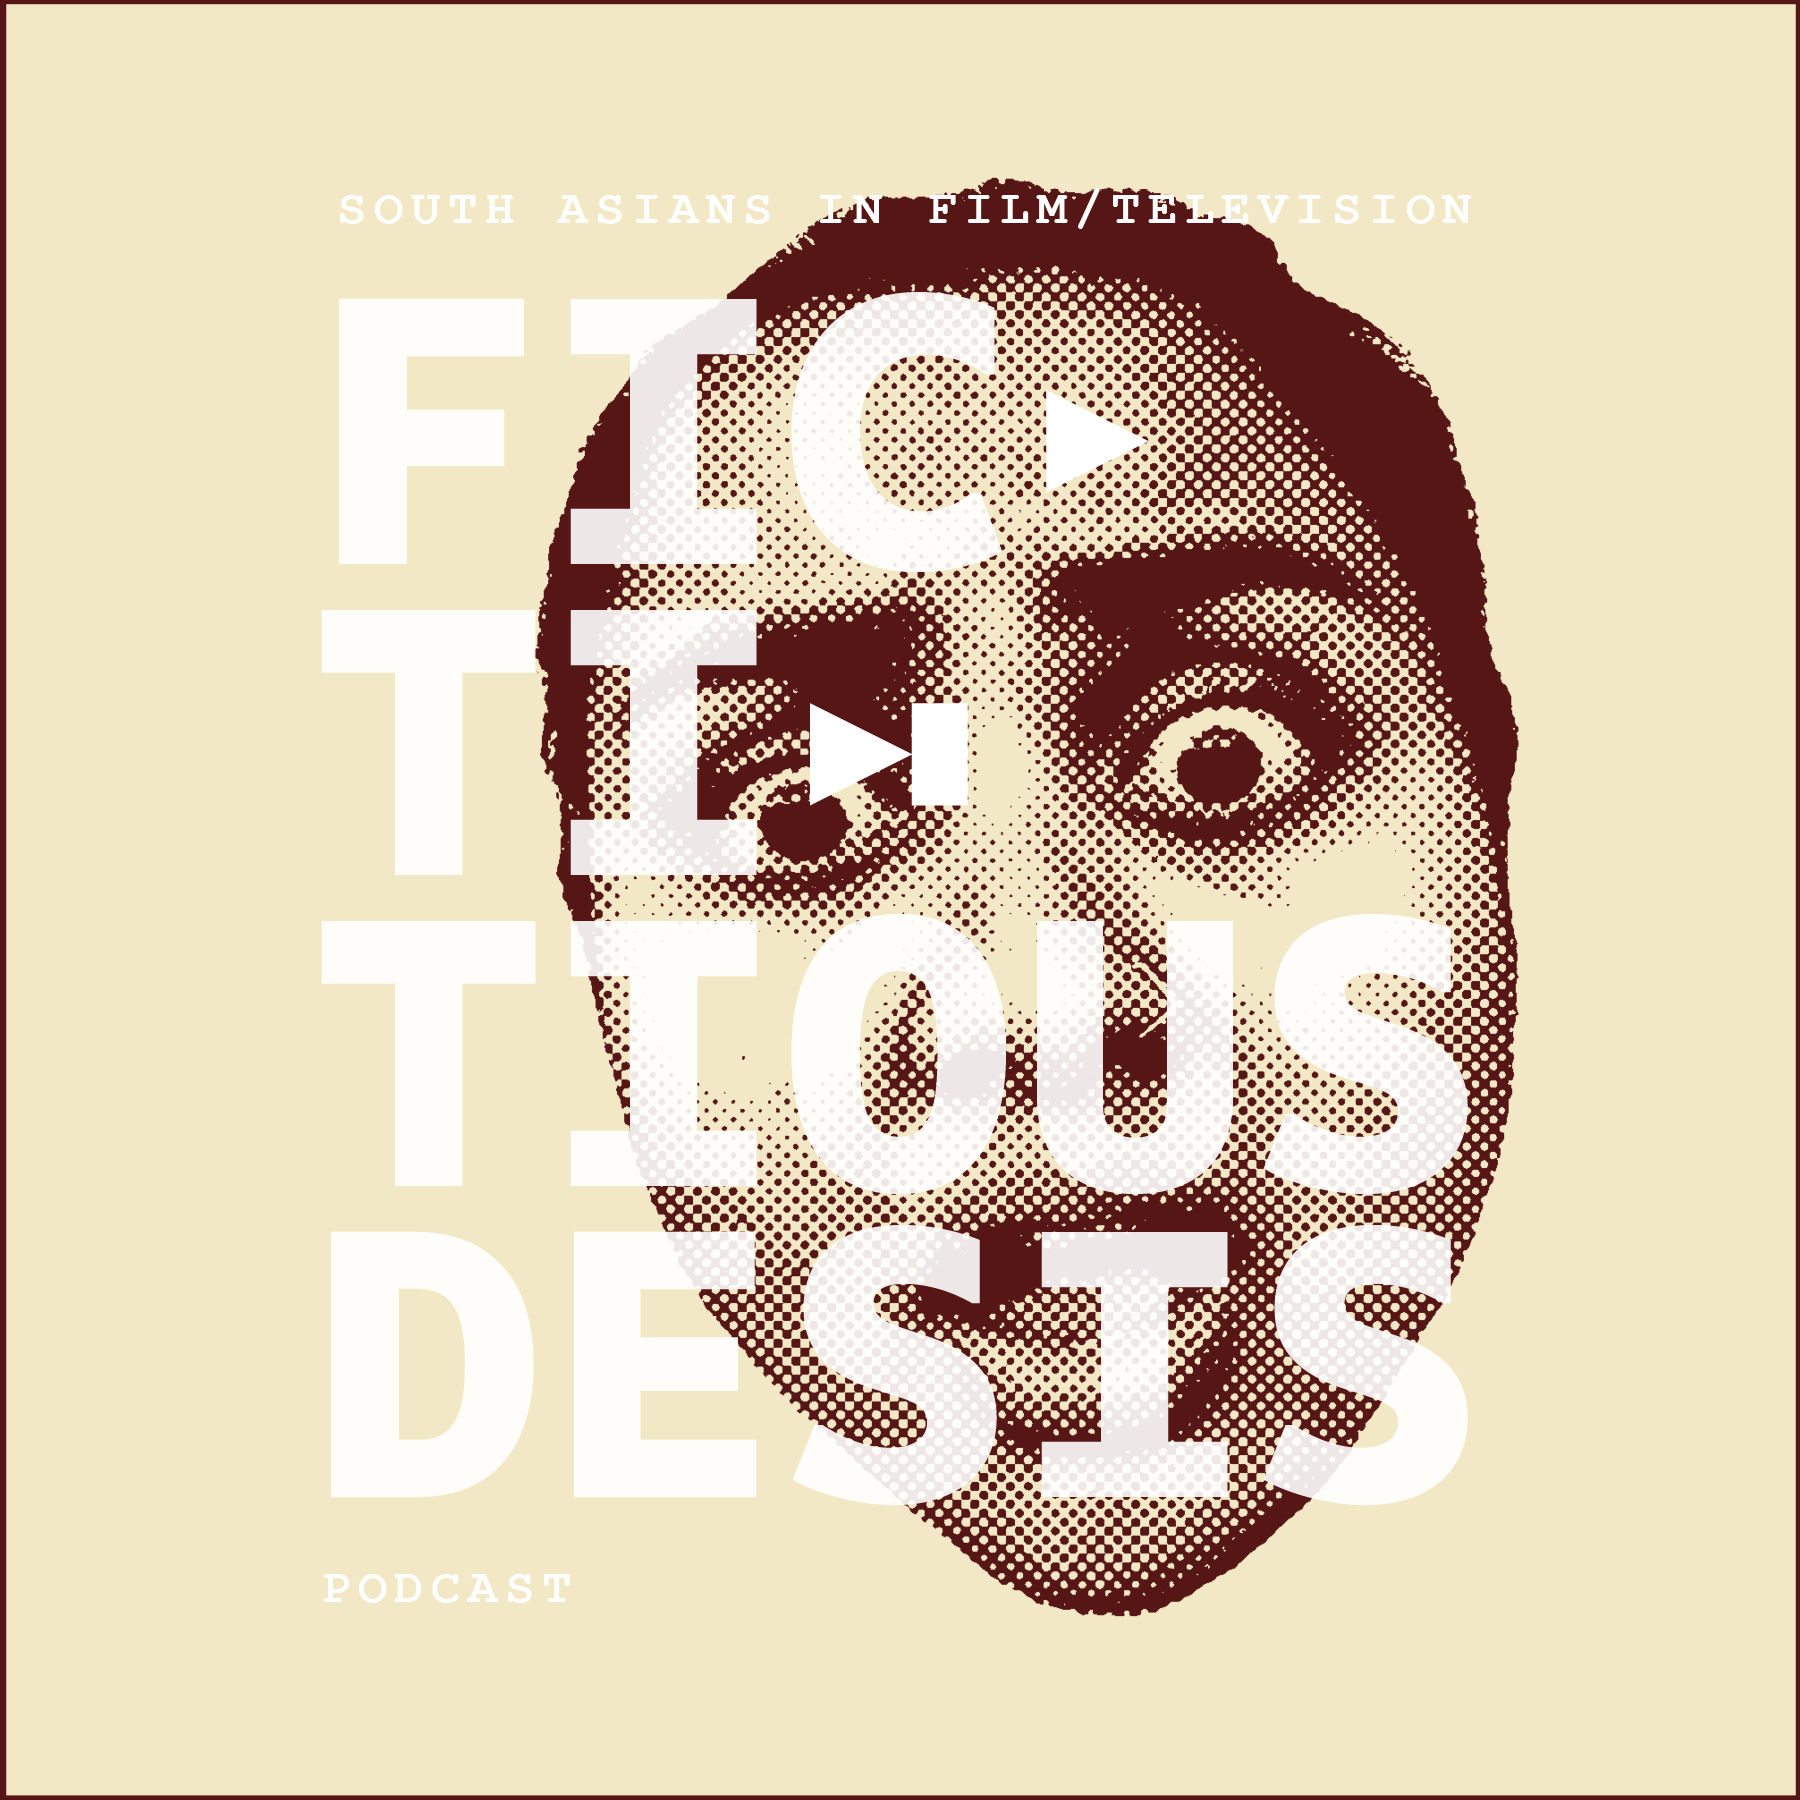 Design for 'Fictitious Desis' podcast